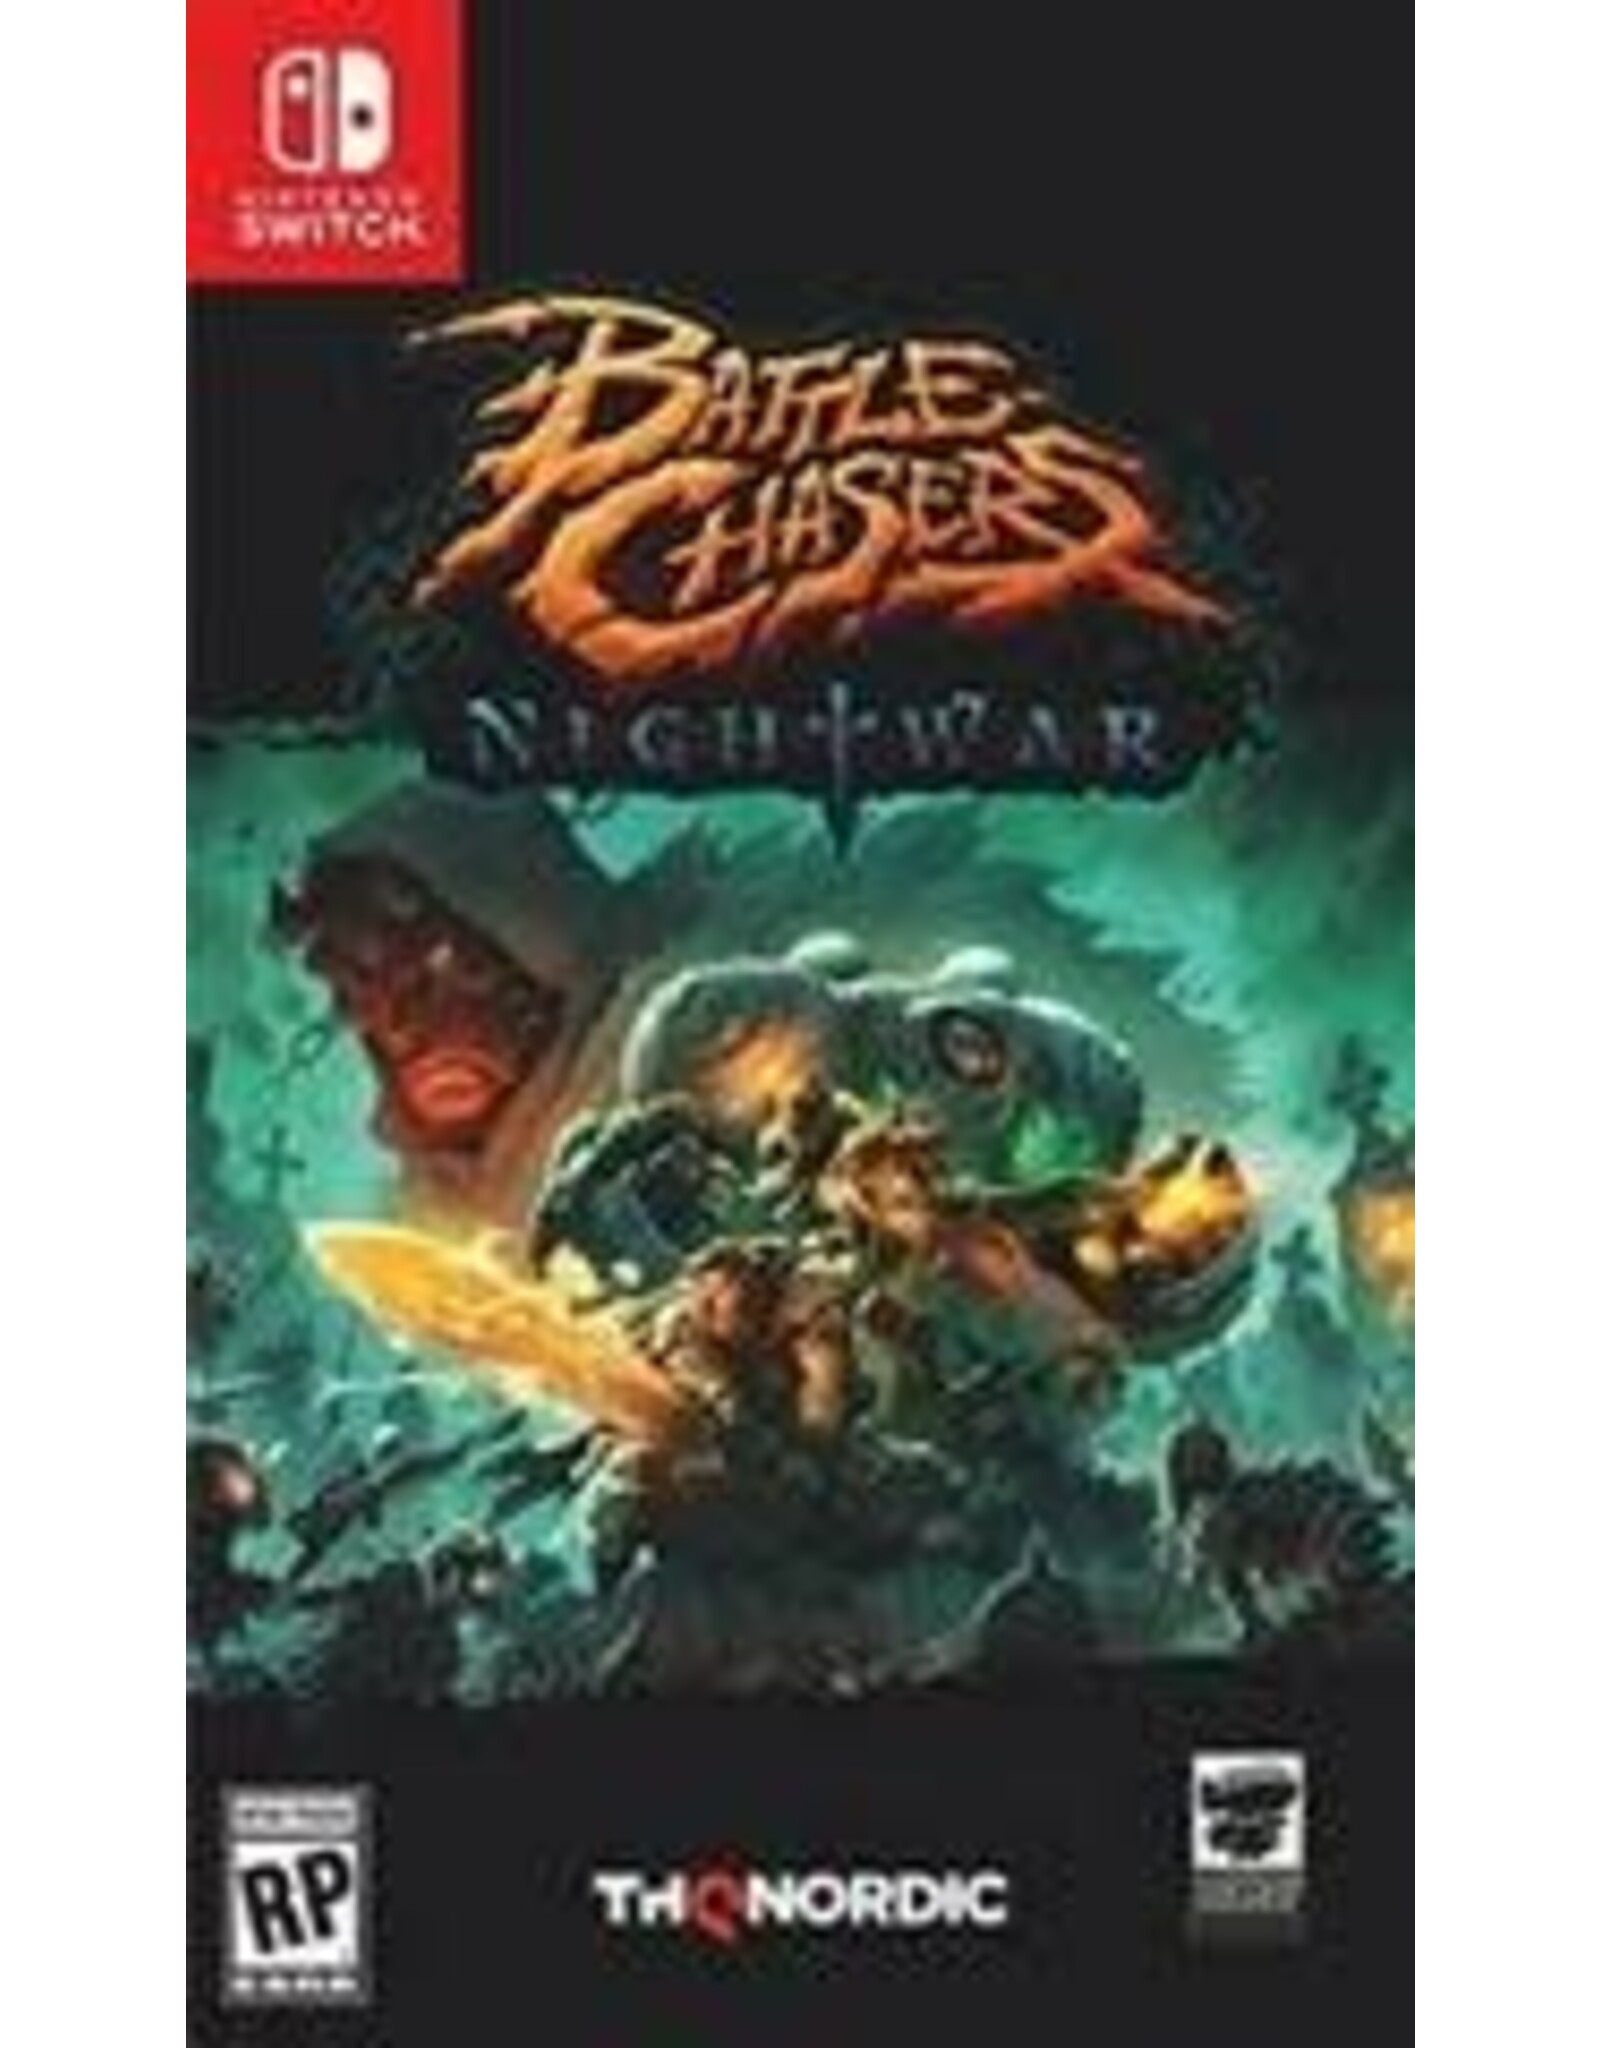 Used Game - Nintendo Switch - Battlechasers: Nightwar [CIB]